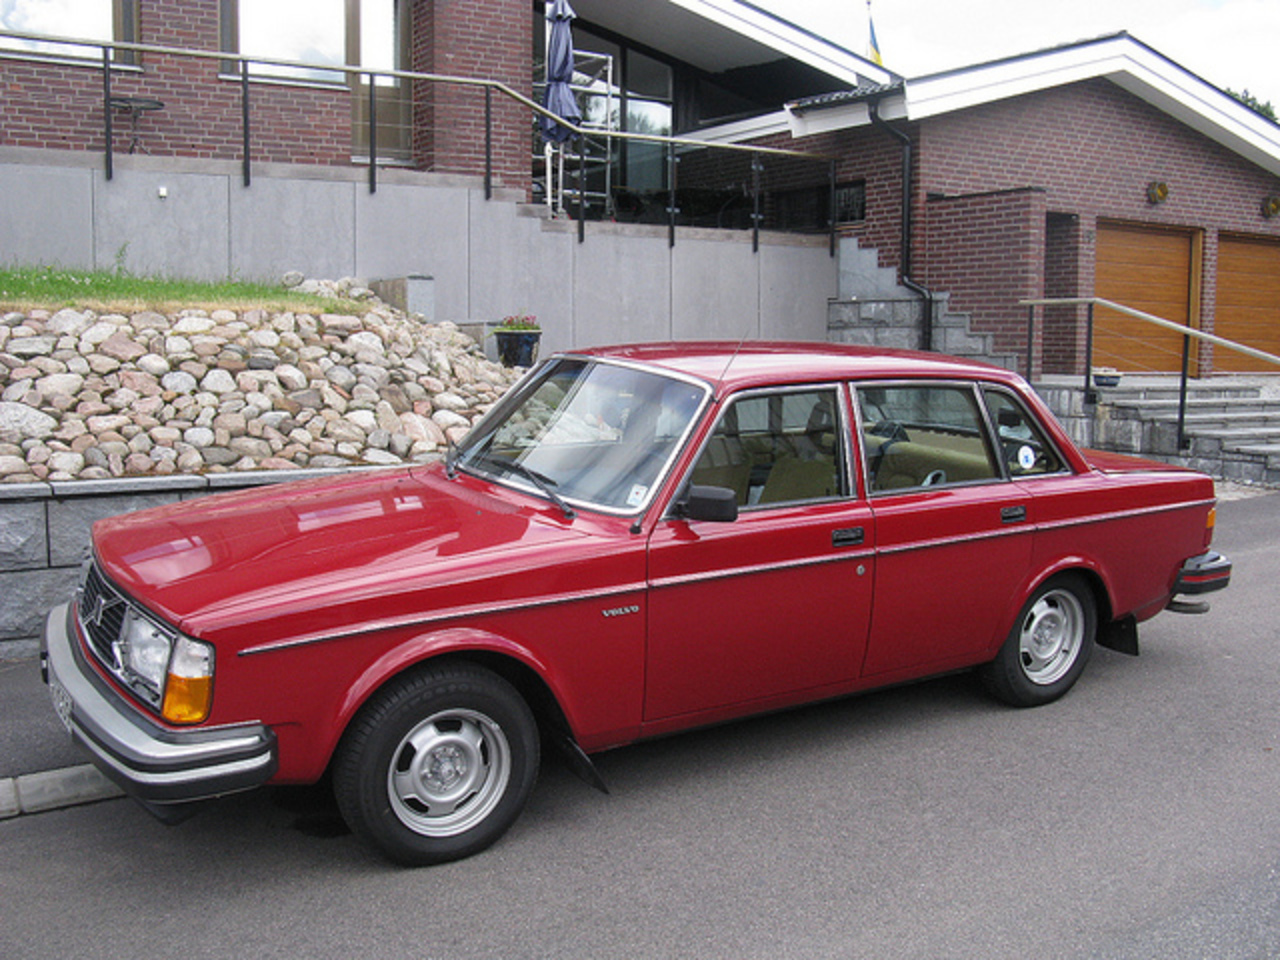 Volvo 244 GL 1980 | Flickr - Photo Sharing!